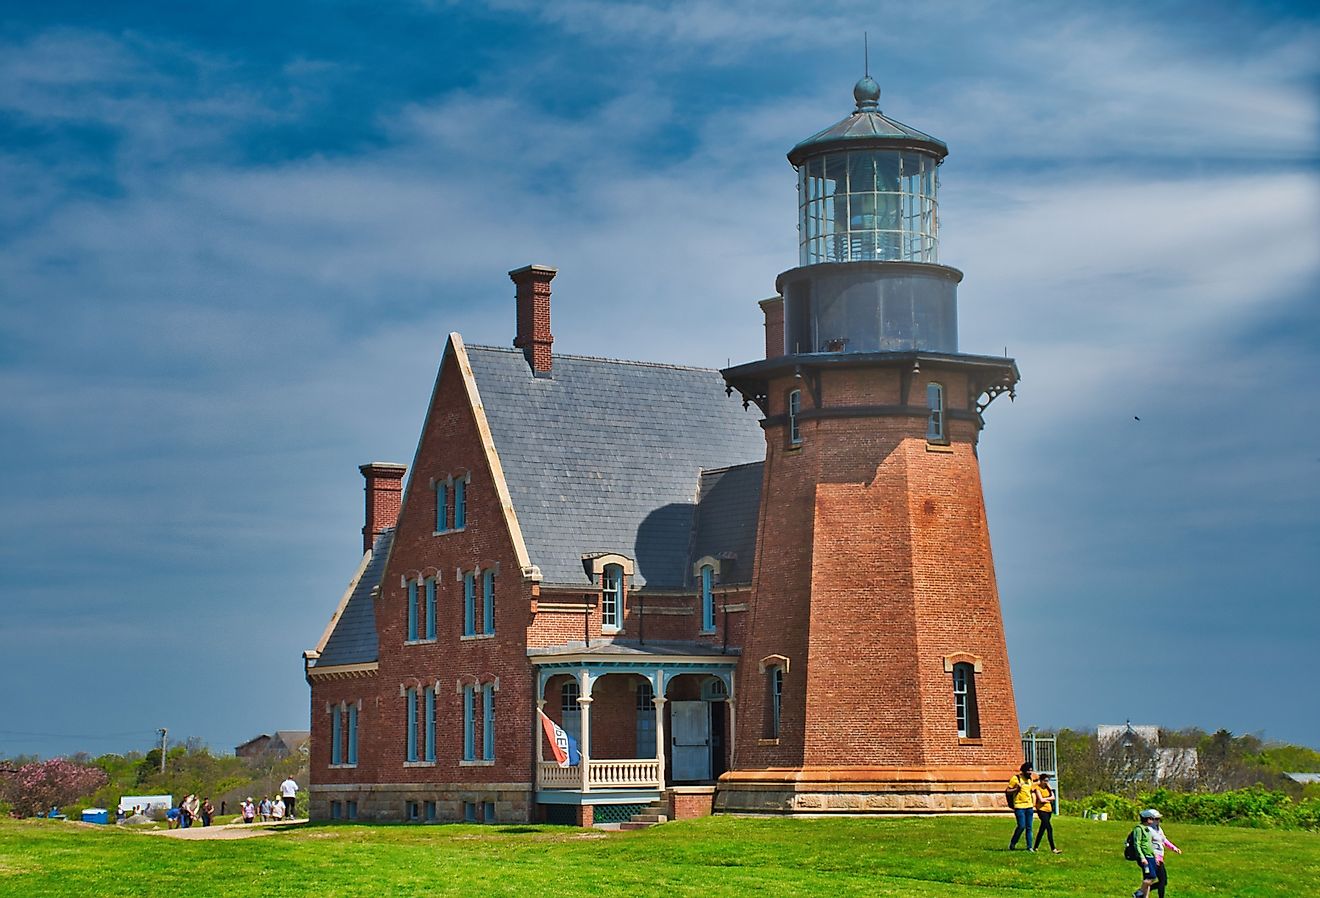 People visiting Block Island's South East Lighthouse, New Shoreham, Rhode Island.